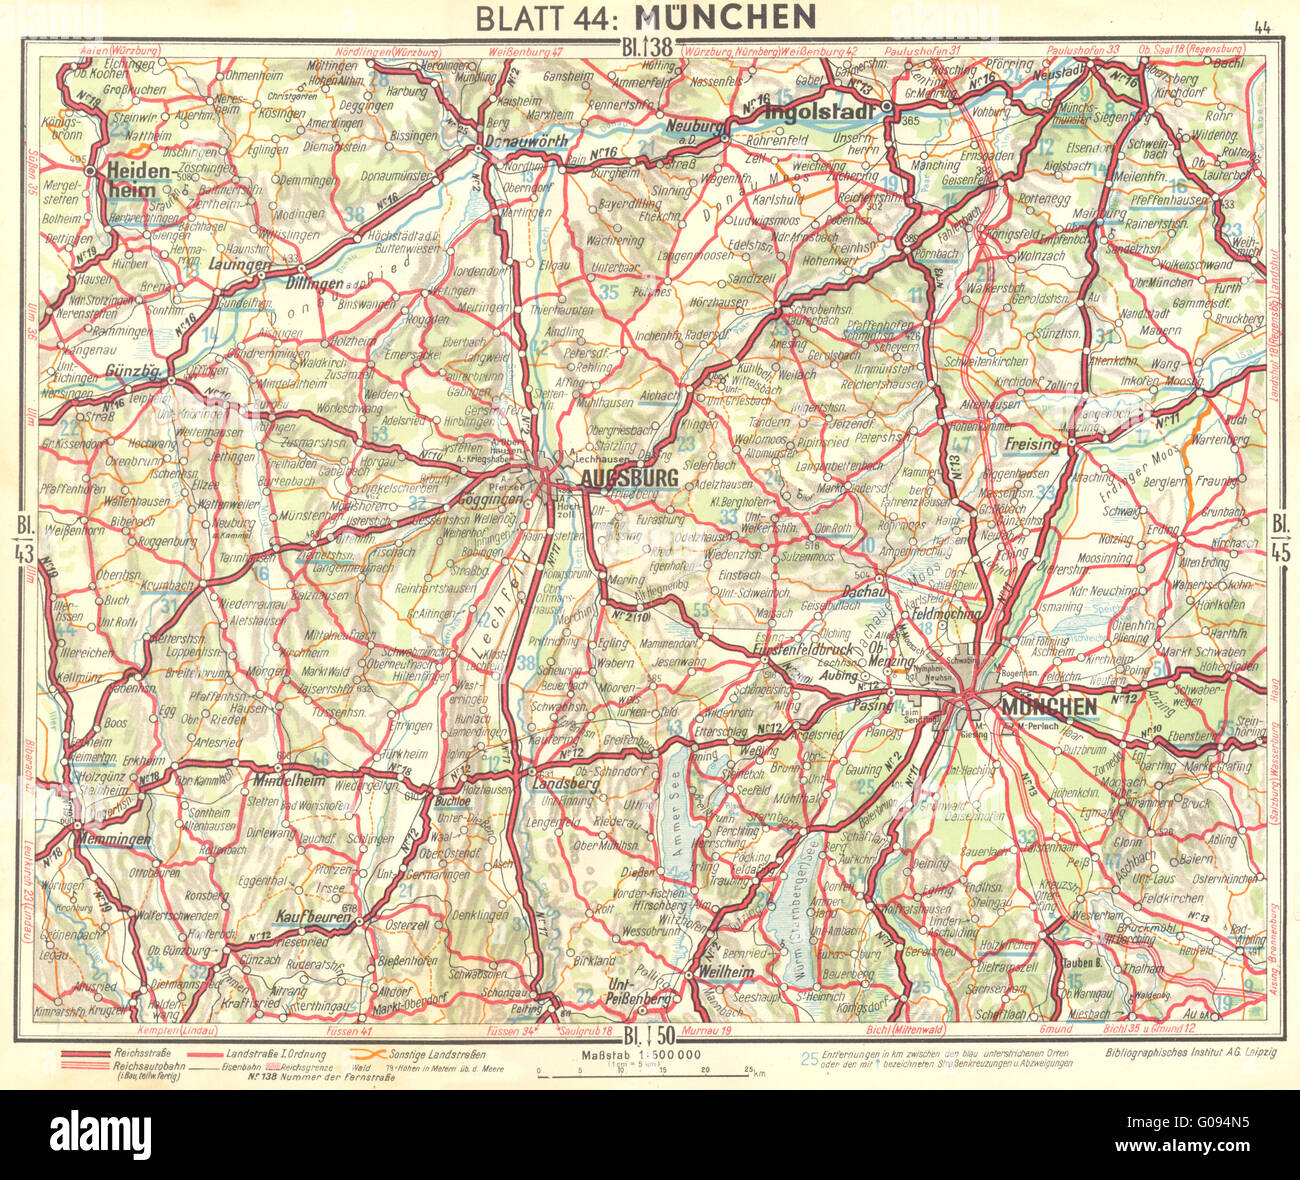 GERMANY: Munchen, 1936 vintage map Stock Photo